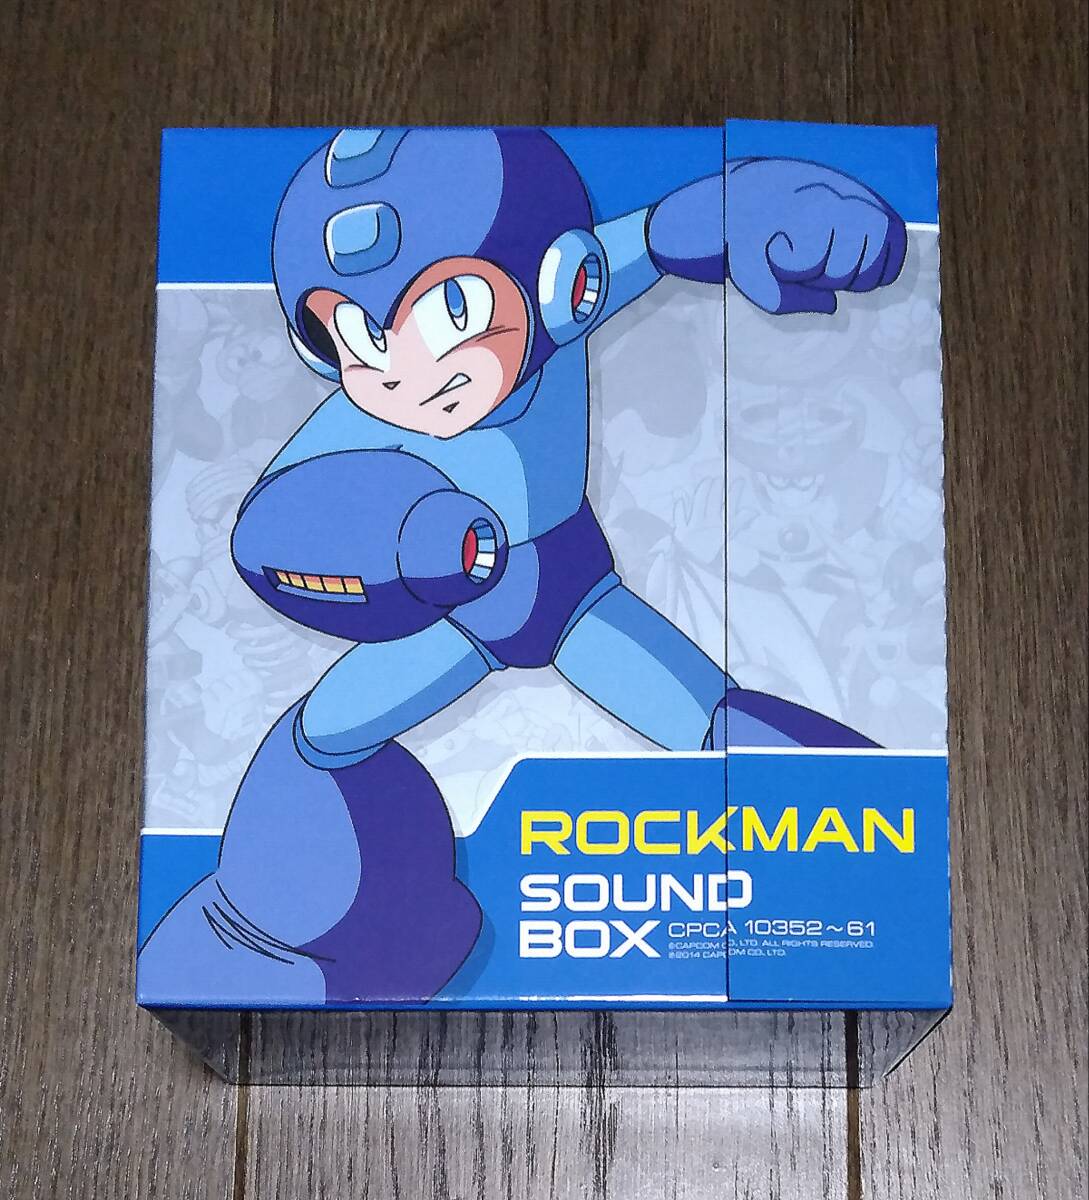 CD - ロックマン サウンドBOX / ファミコン, スーパーファミコン, プレイステーション, サウンドトラック, サウンドボックス, カプコンの画像1